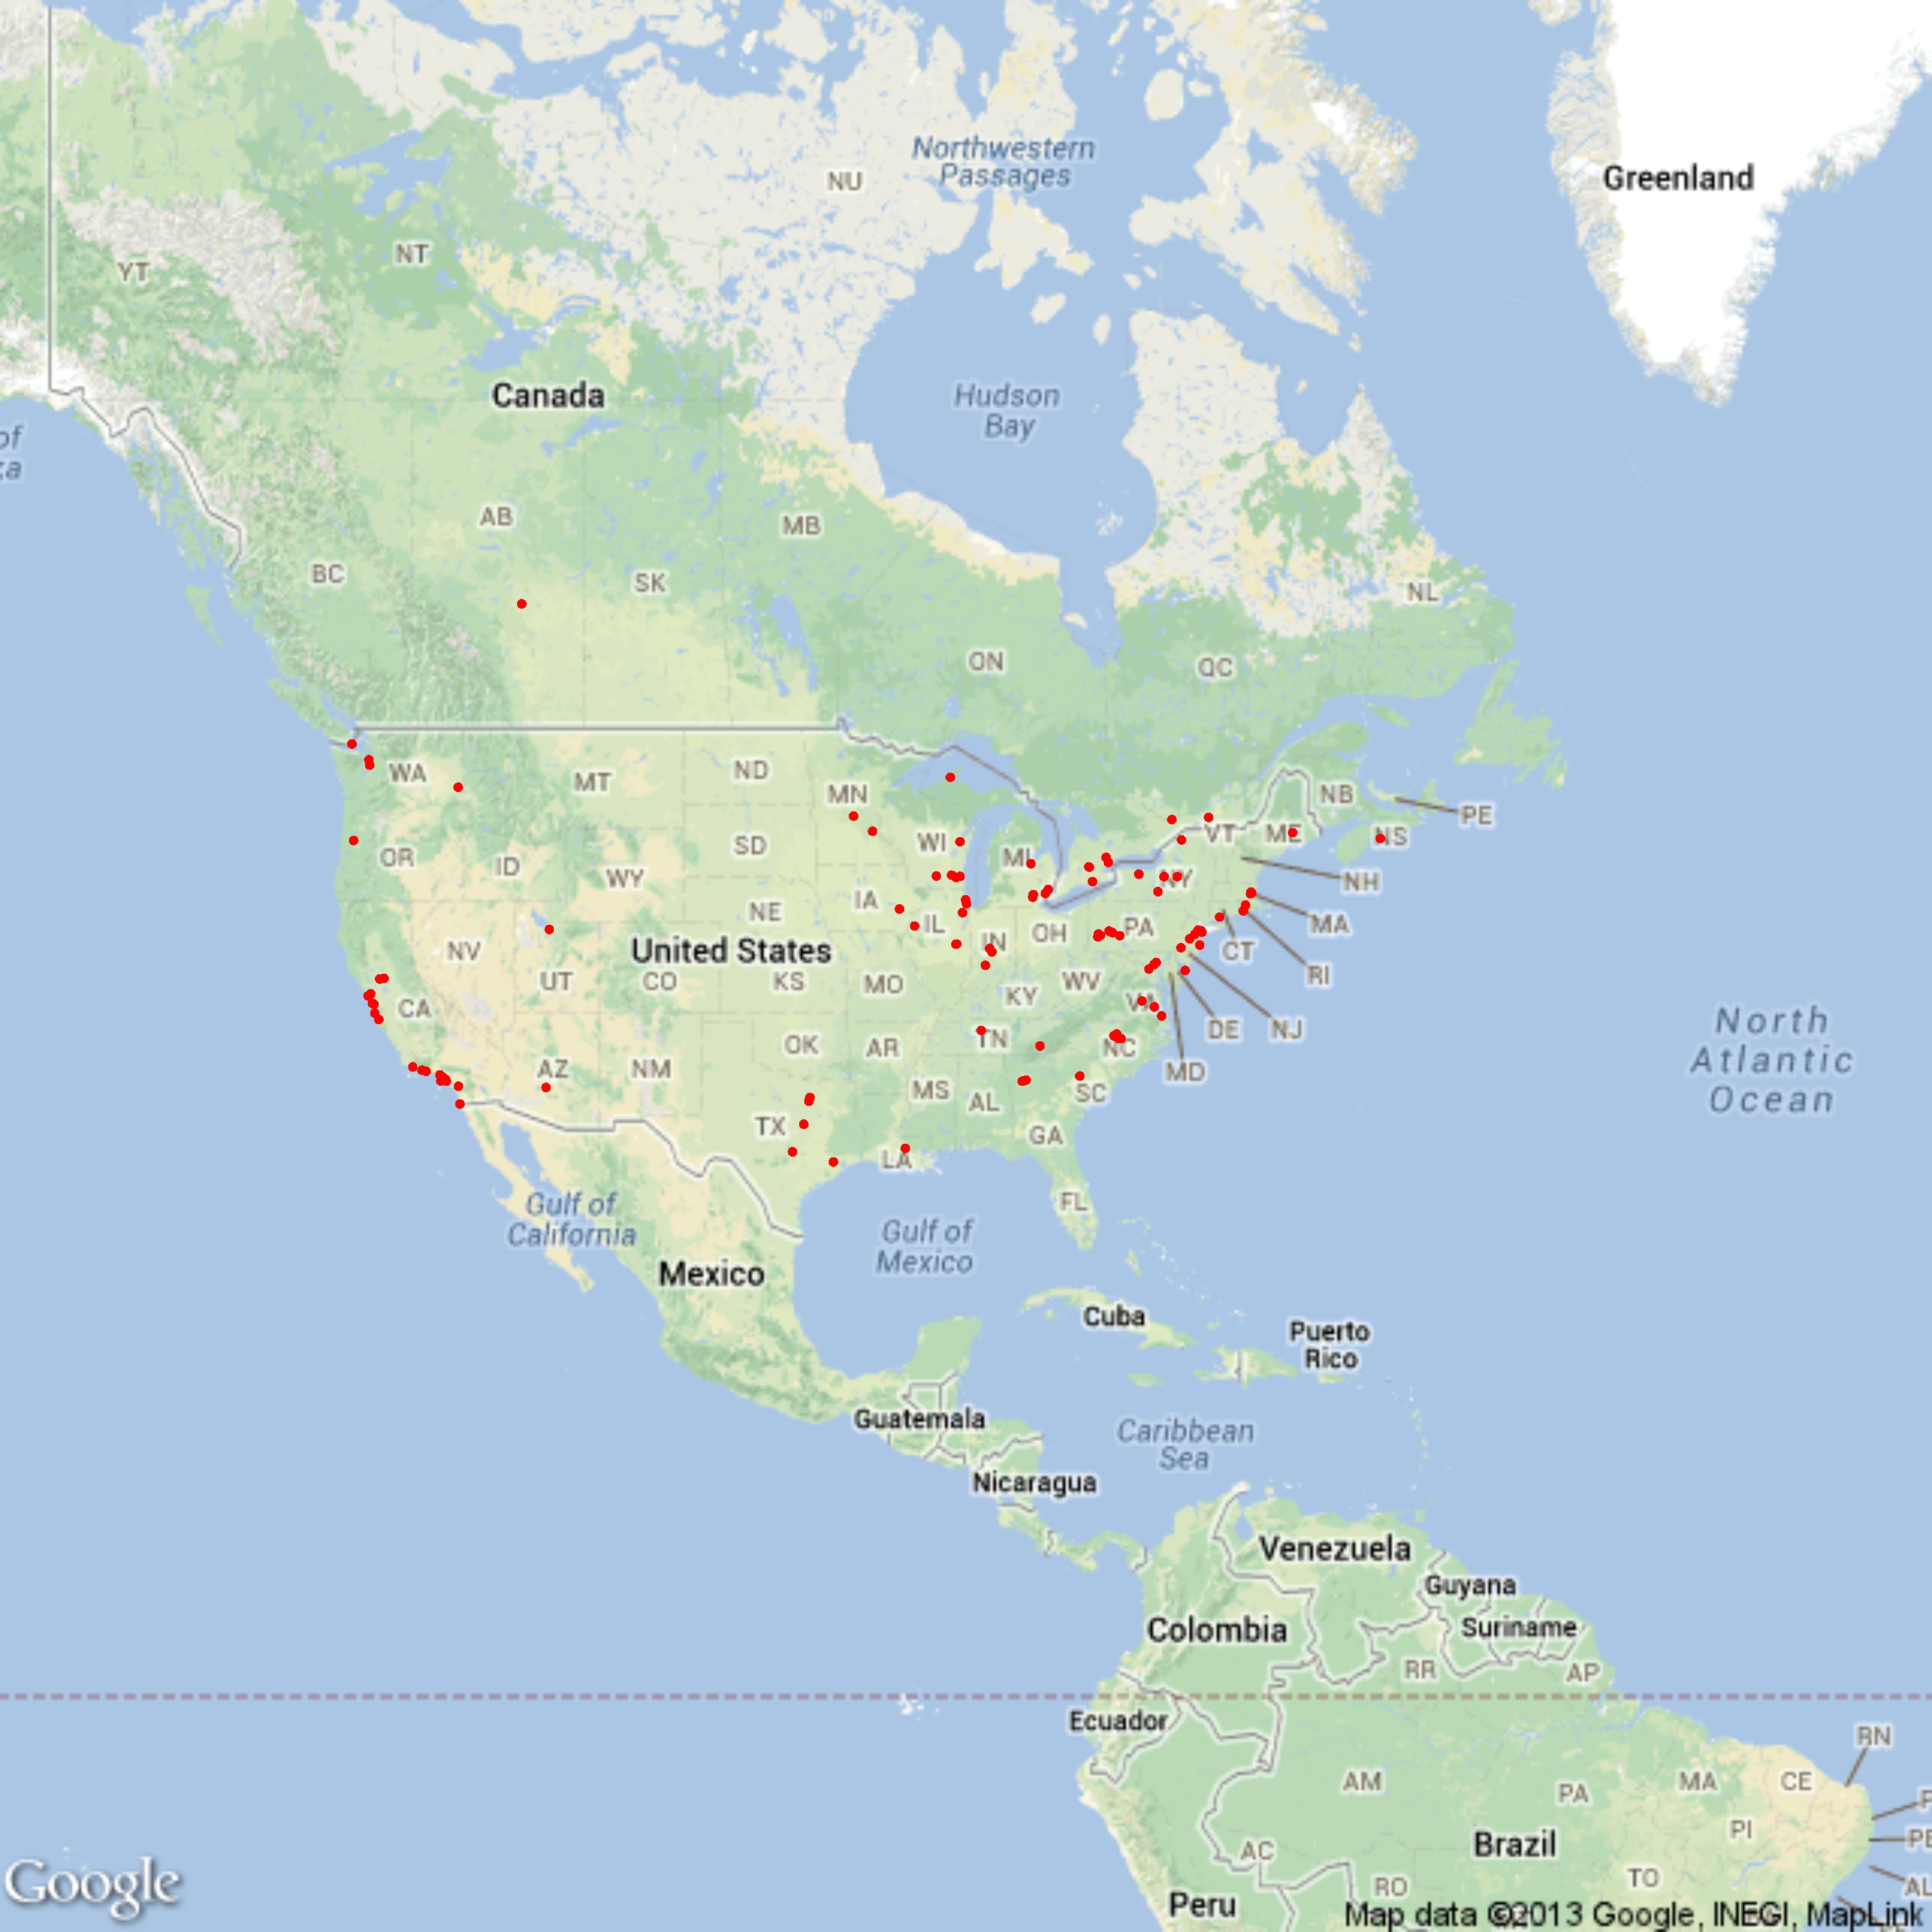 Google Map Us And Canada Maps Usa States Florida 45 With East Asia 9 - Maps Google Florida Usa